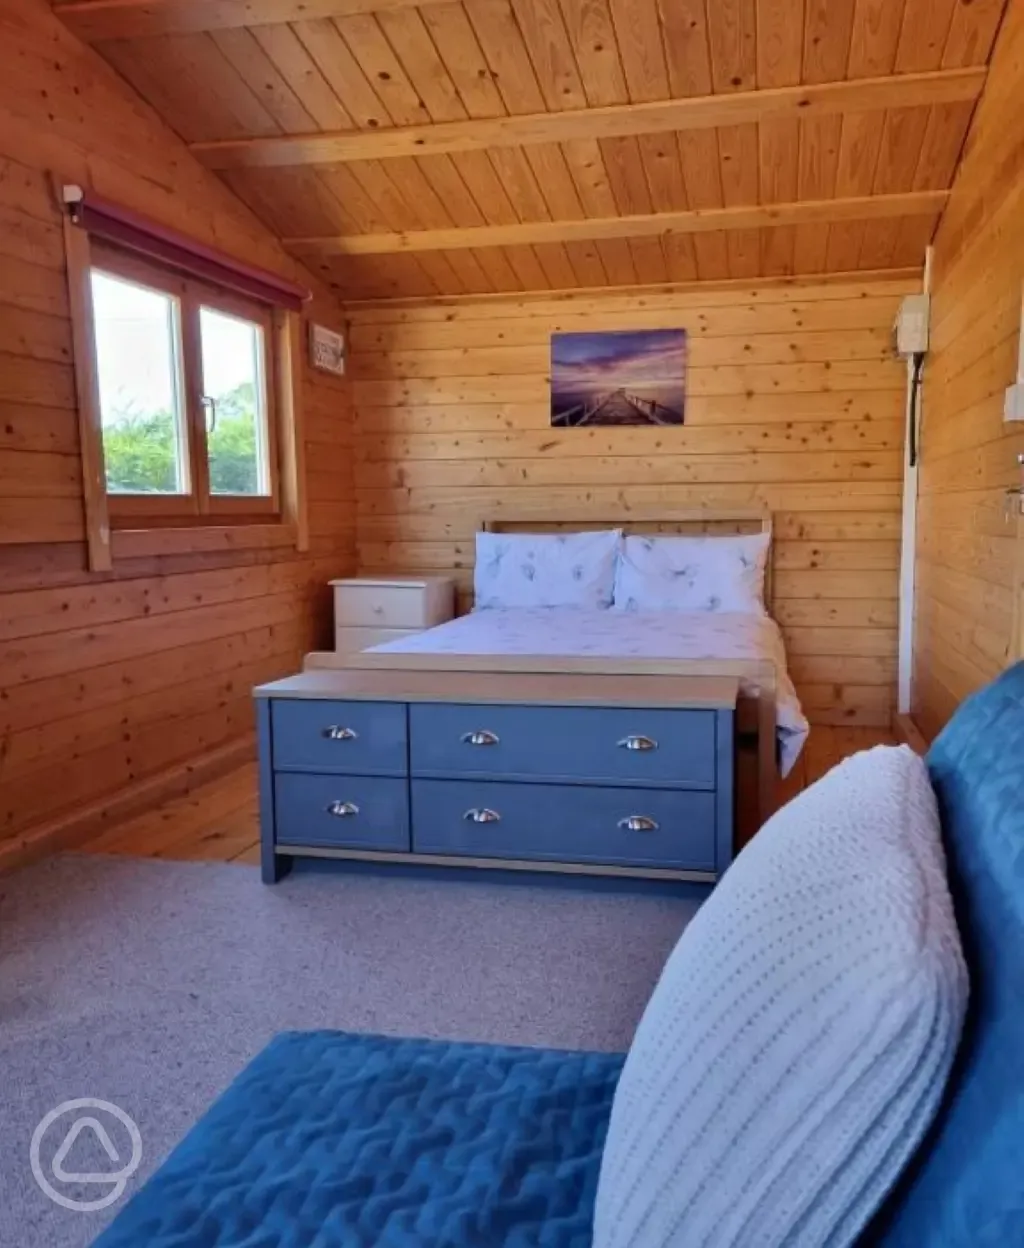 The lodge bedroom